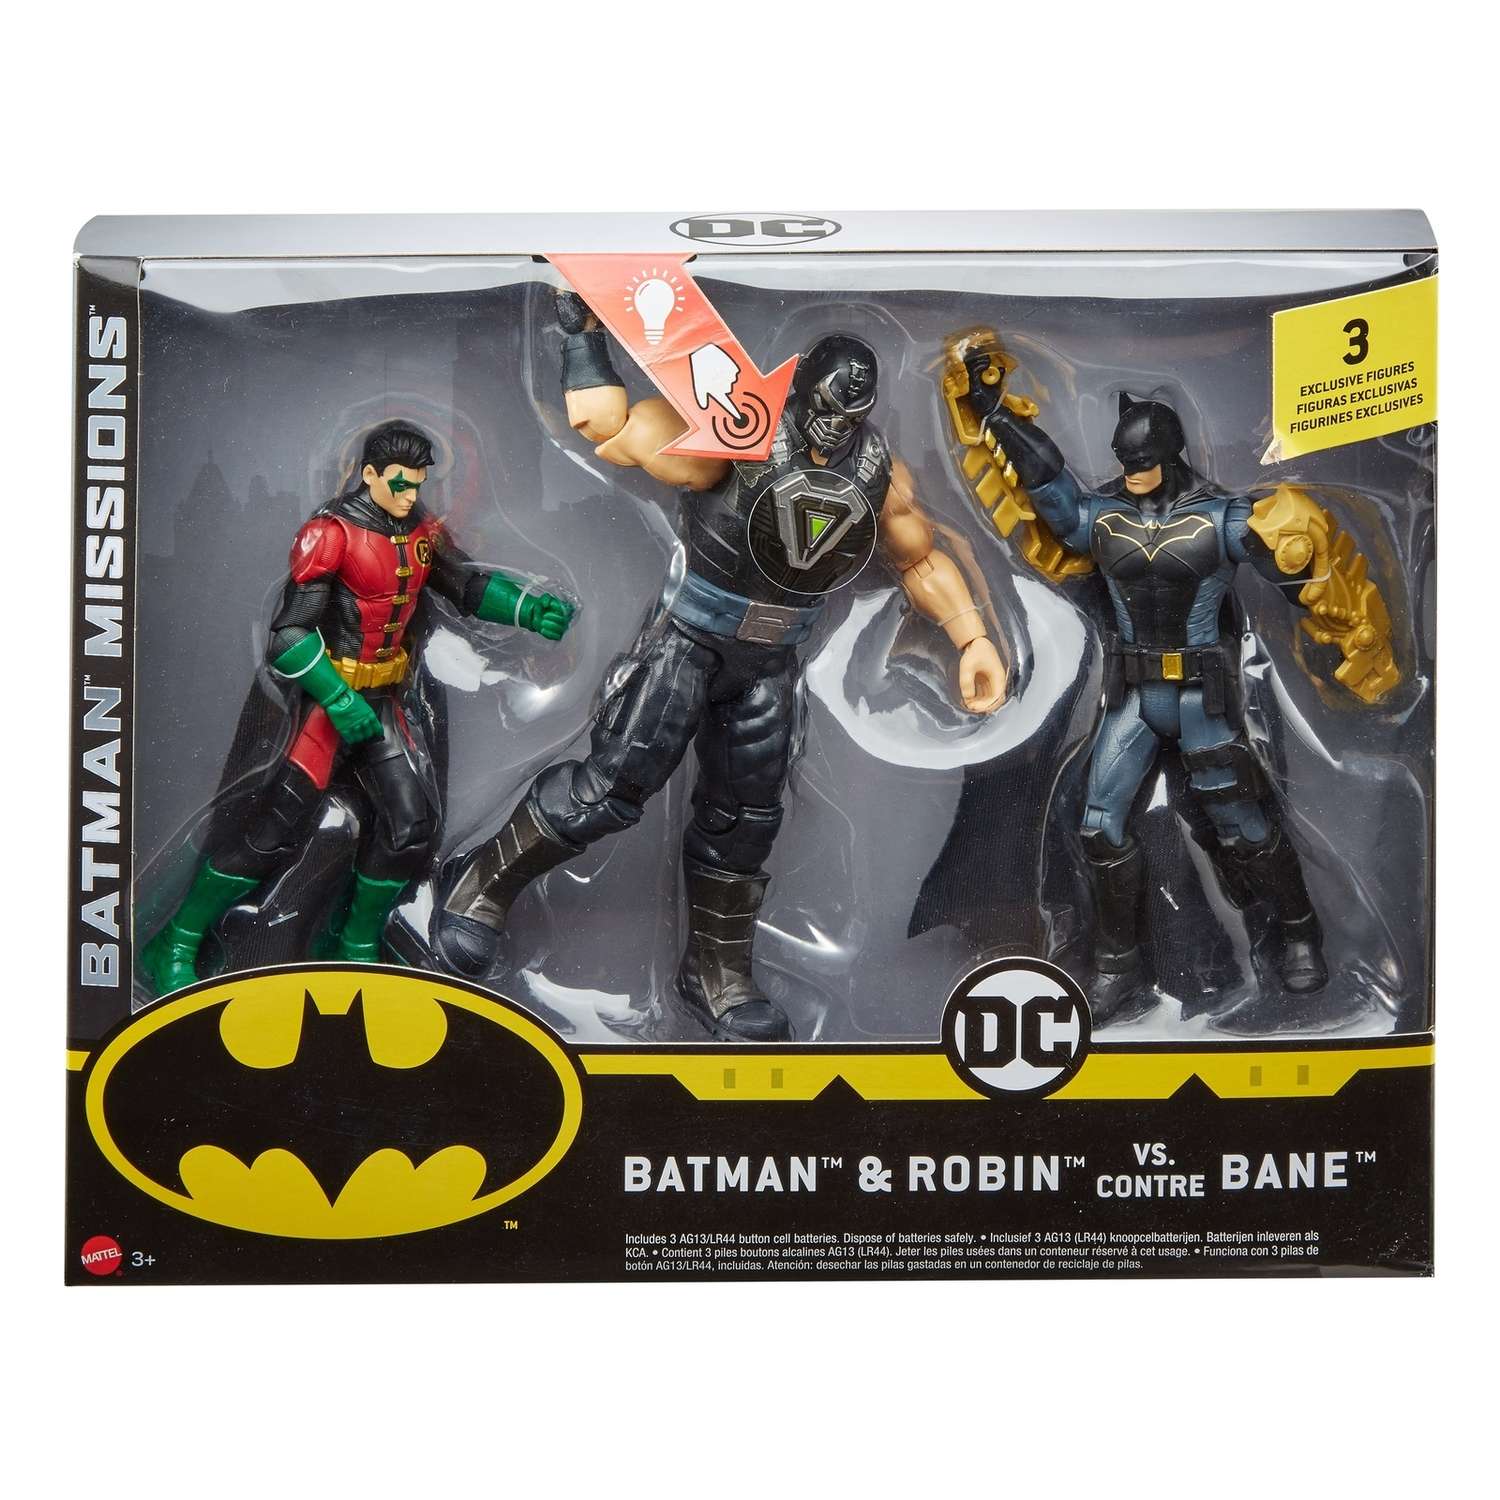 Batman наборы. Фигурка Batman Робин fvm82. Игрушка фигурка Робин Бэтмен Бейна набор. Игрушки Бэтмен и Бэйн набор. Набор фигурок Batman 3шт fvm57.